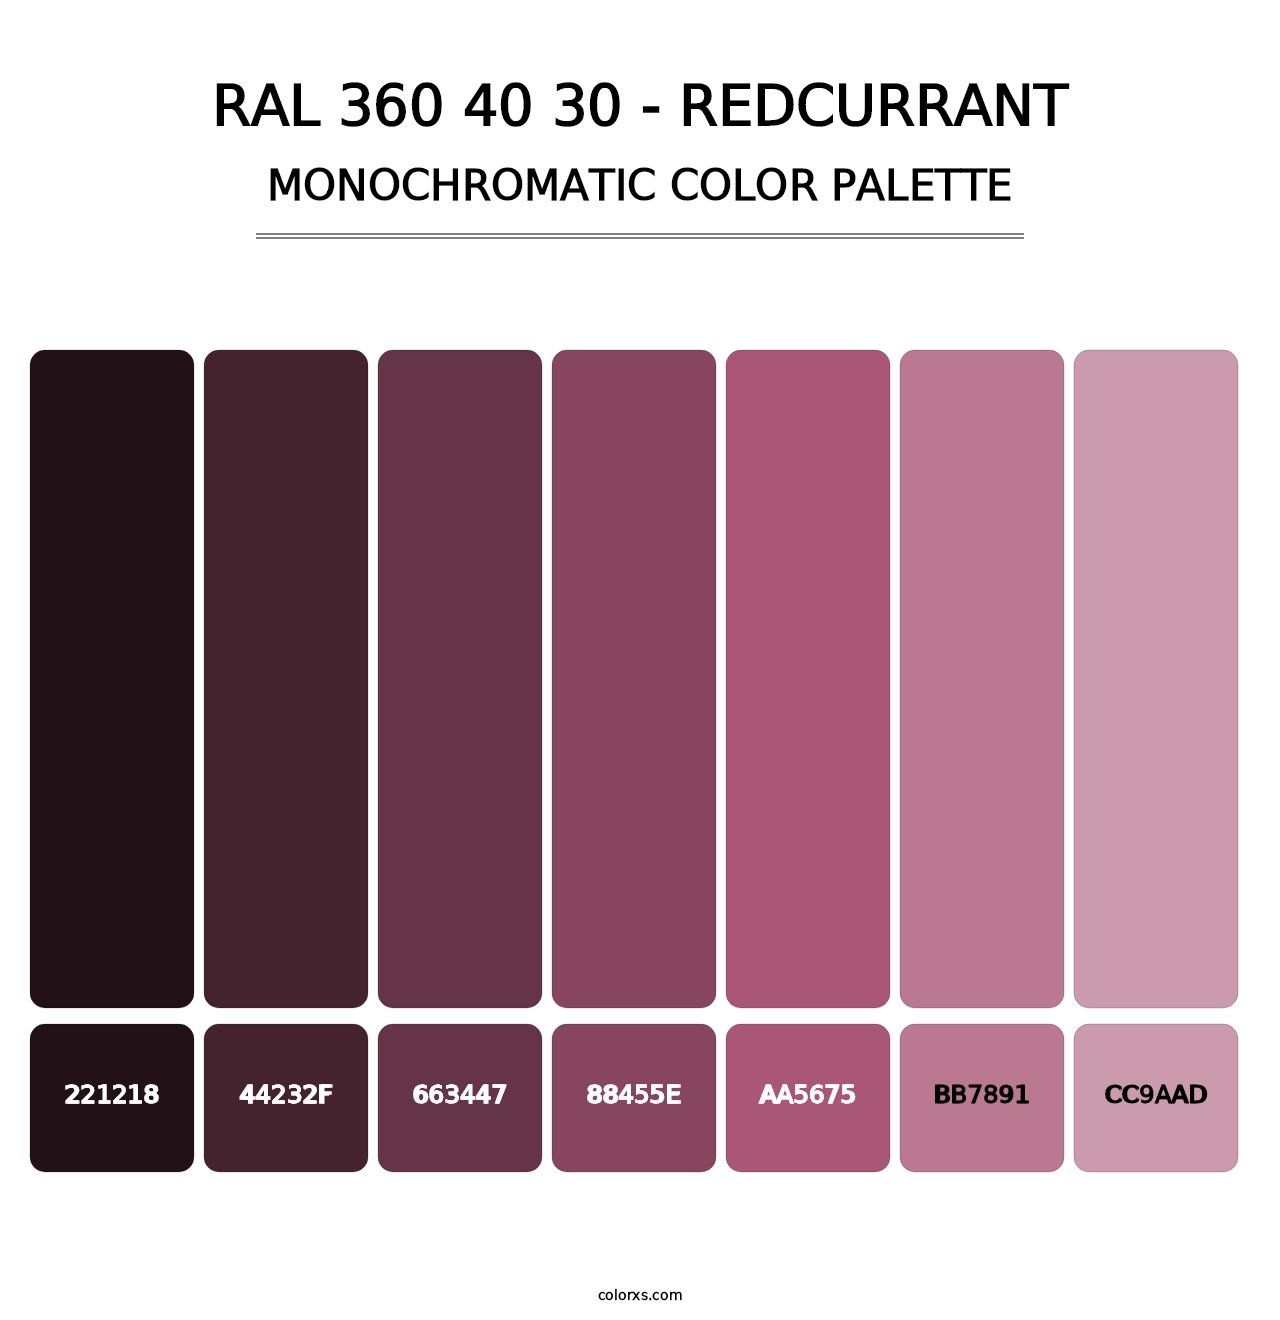 RAL 360 40 30 - Redcurrant - Monochromatic Color Palette